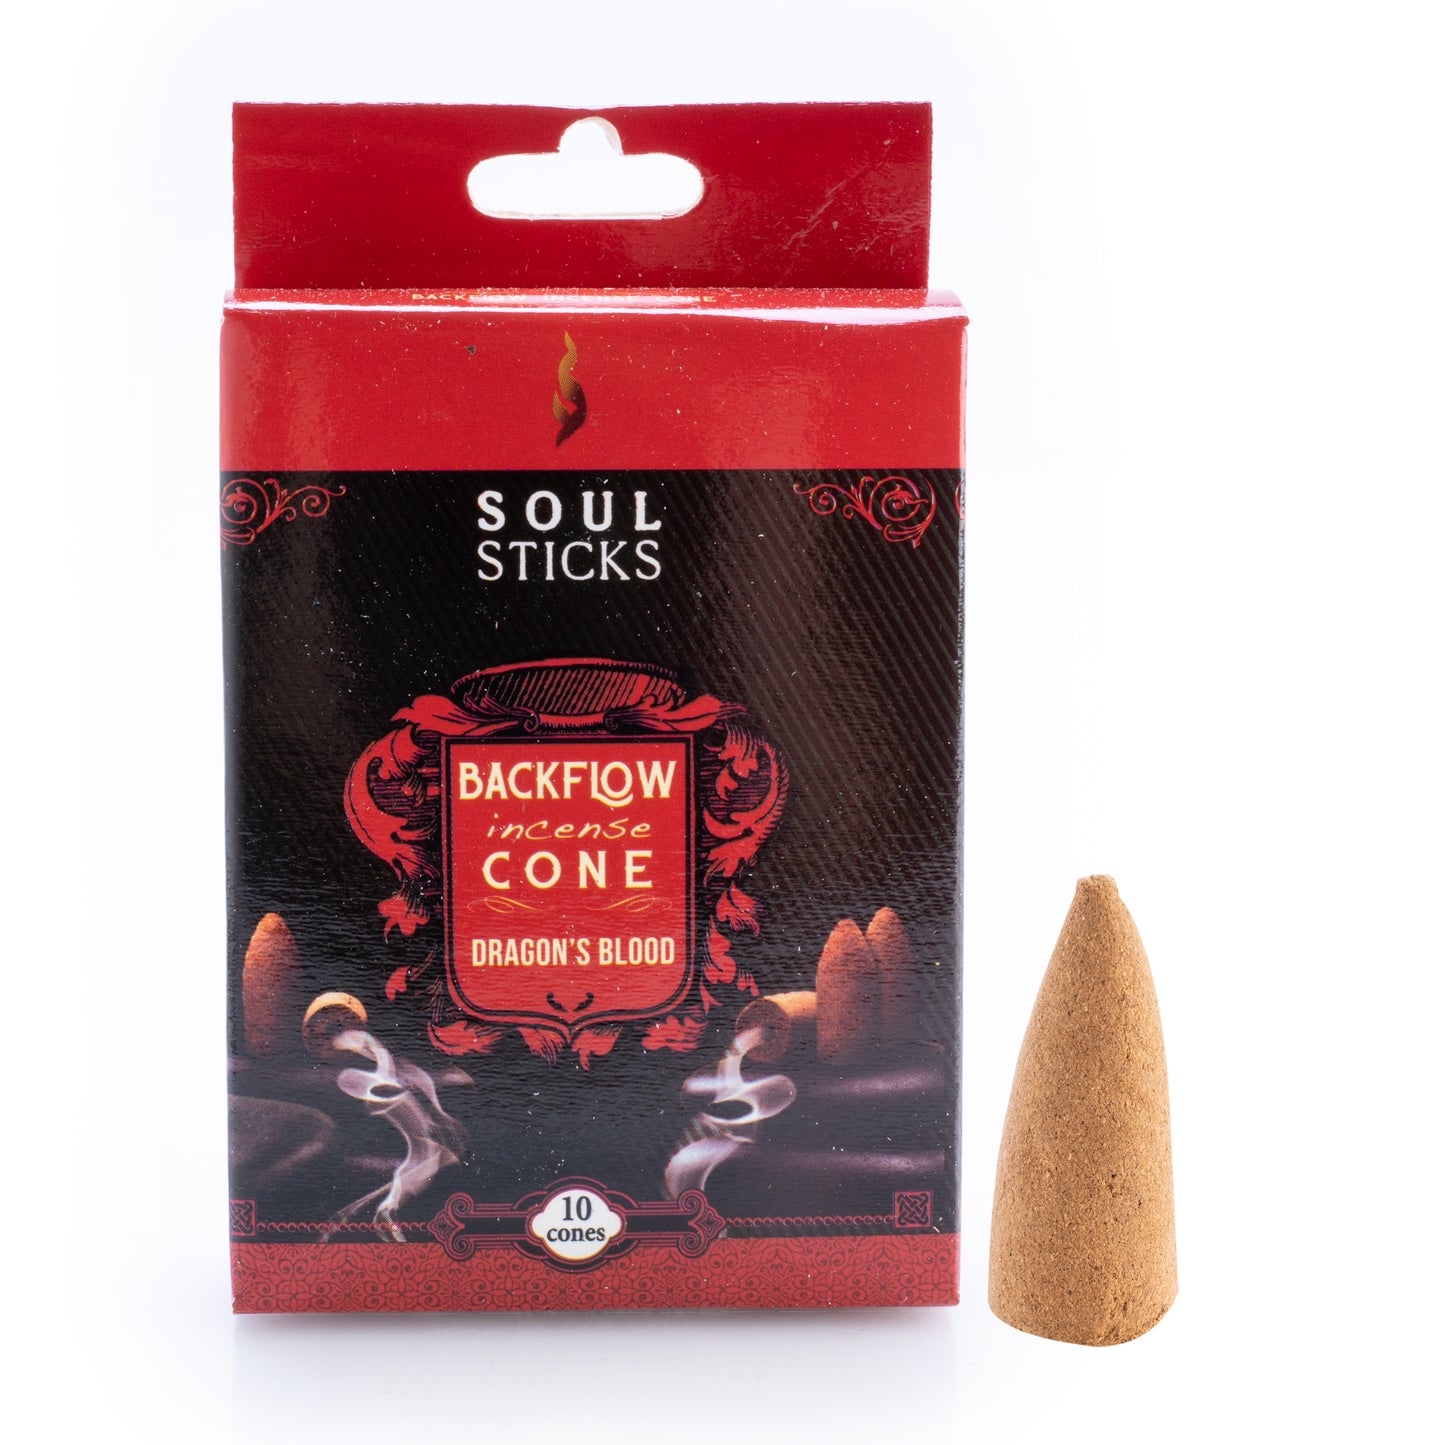 Soul Sticks Dragon’s Blood Backflow Incense Cone - Spirit & Stone